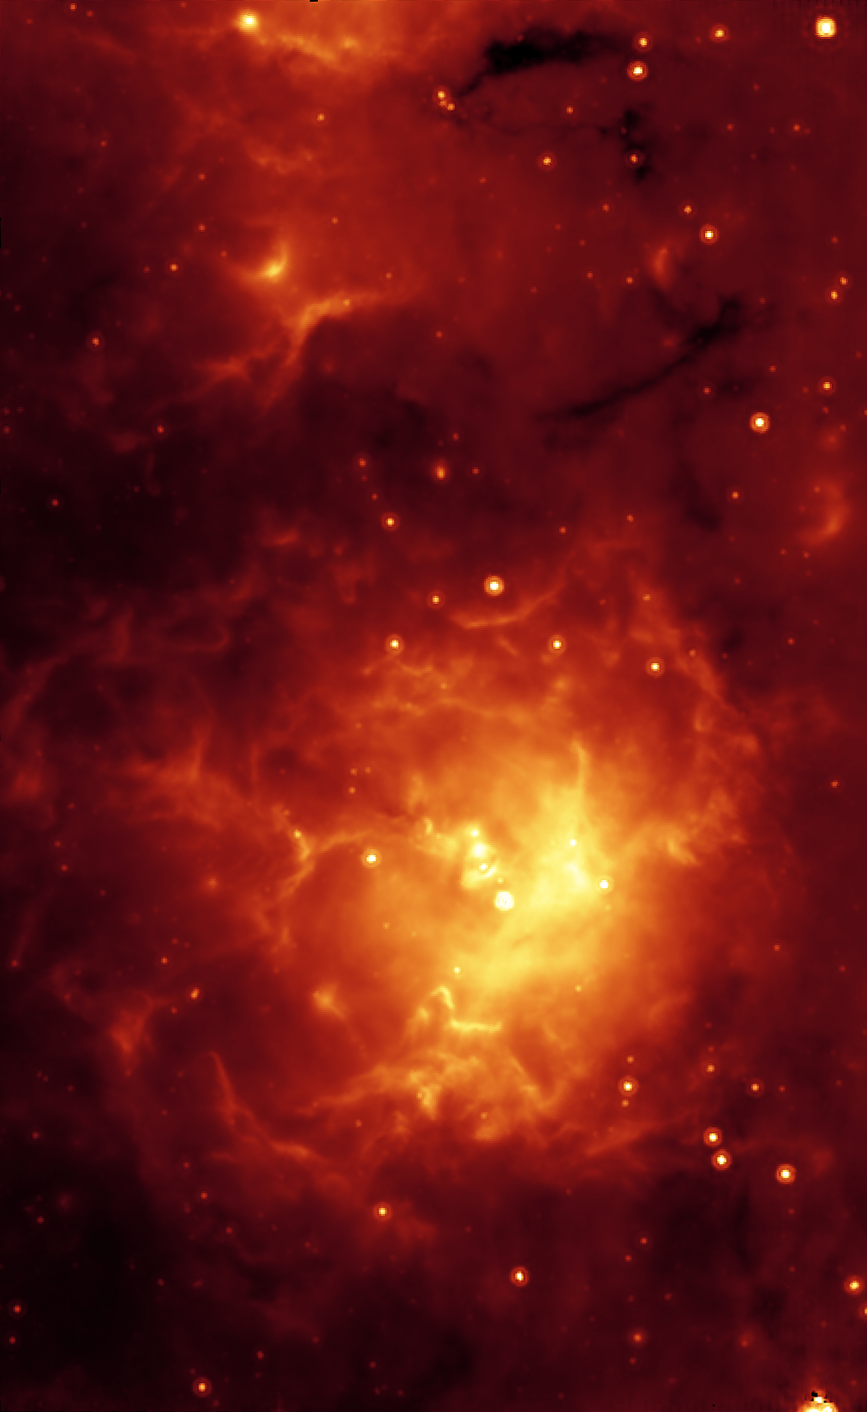 VAMP Virtual Astronomy Multimedia Project